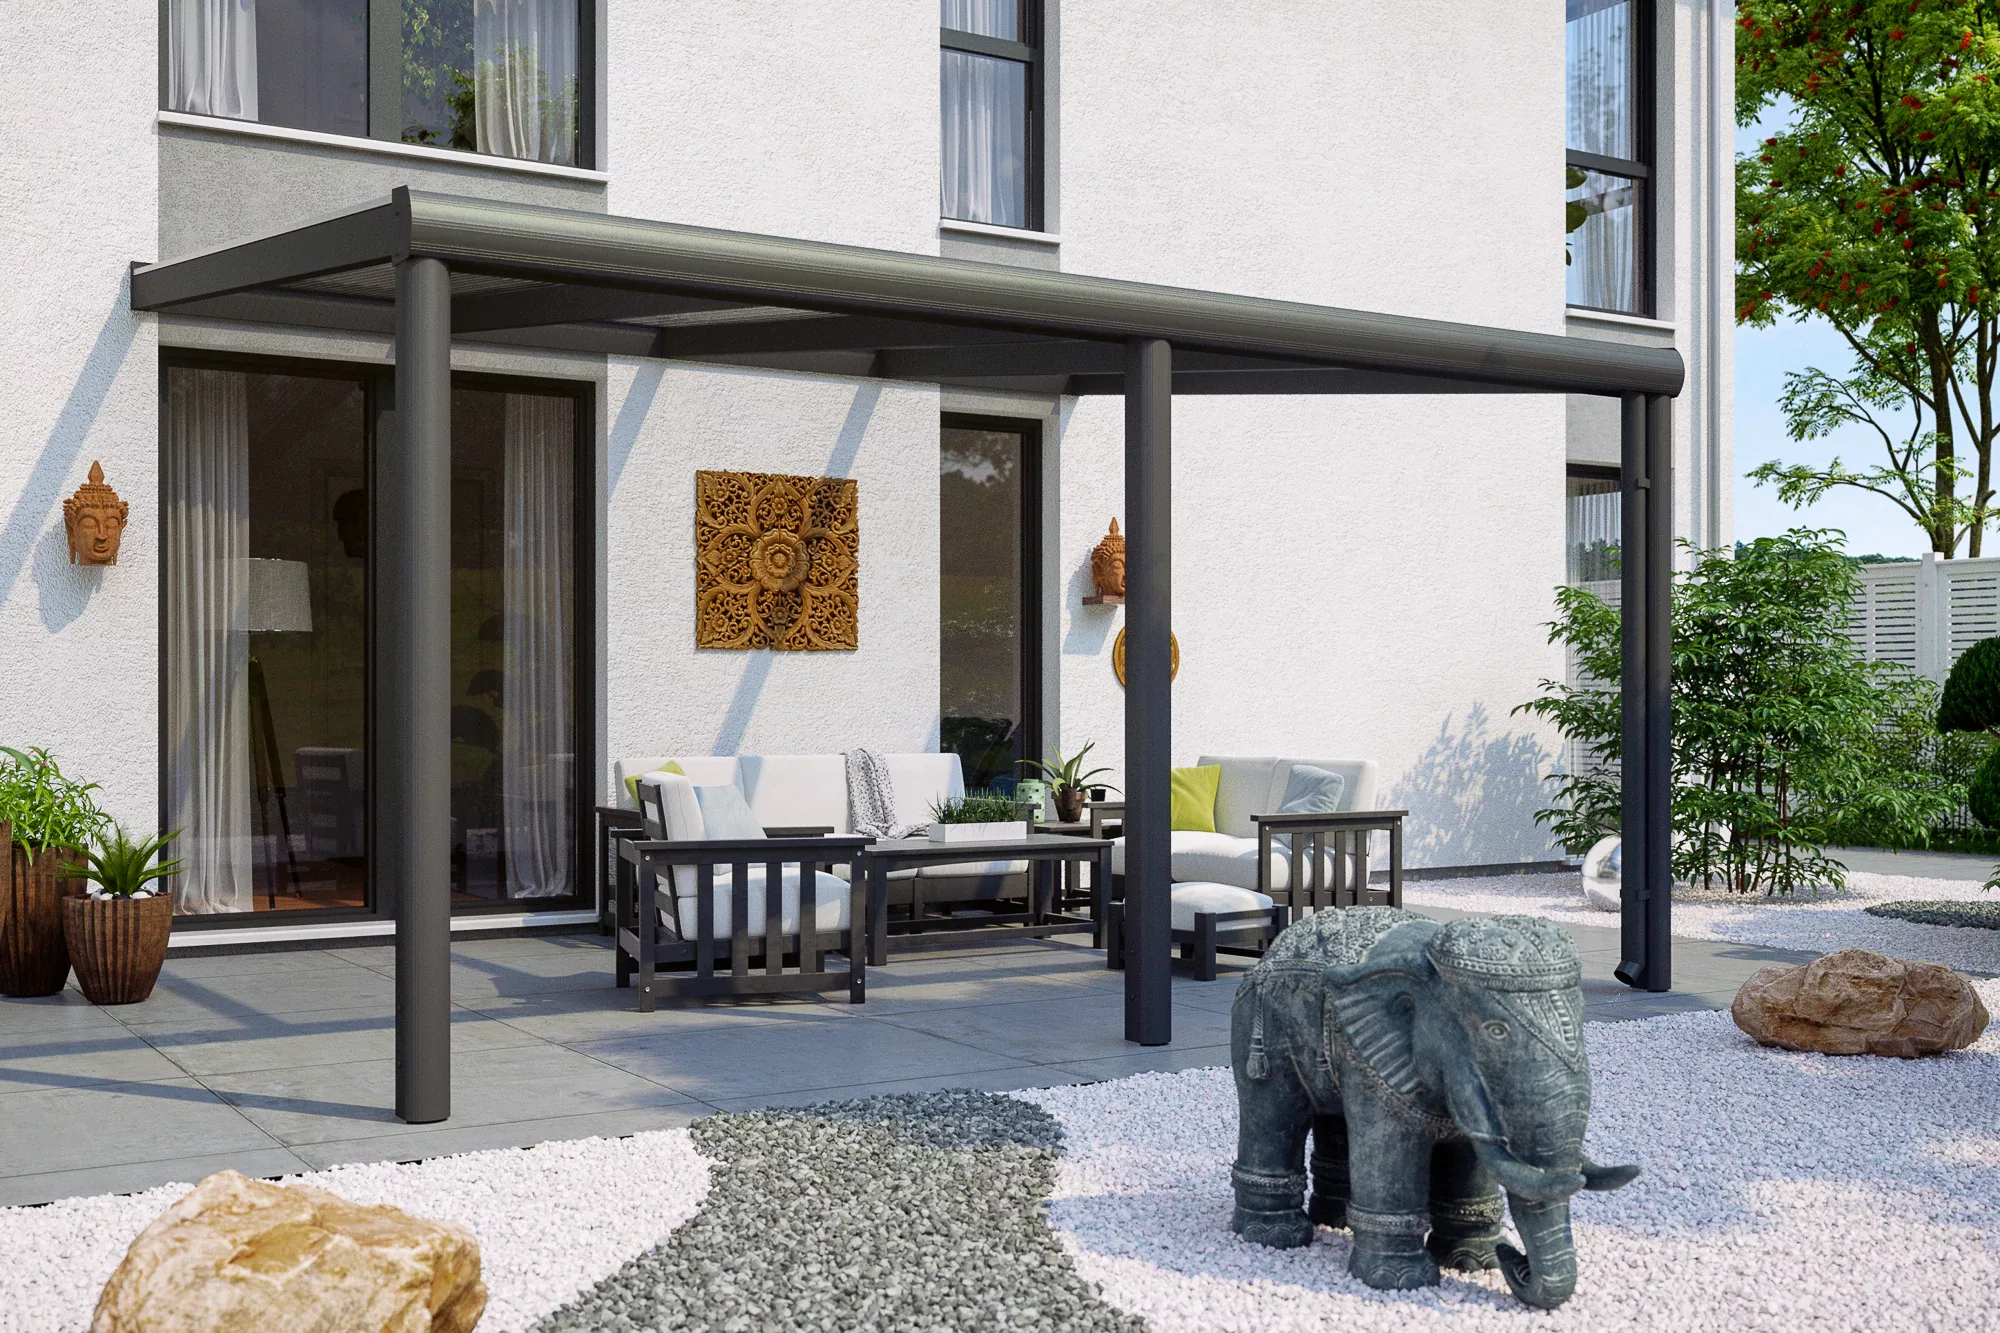 Skan Holz Terrassenüberdachung Garda 434 x 257 cm Aluminium Anthrazit günstig online kaufen